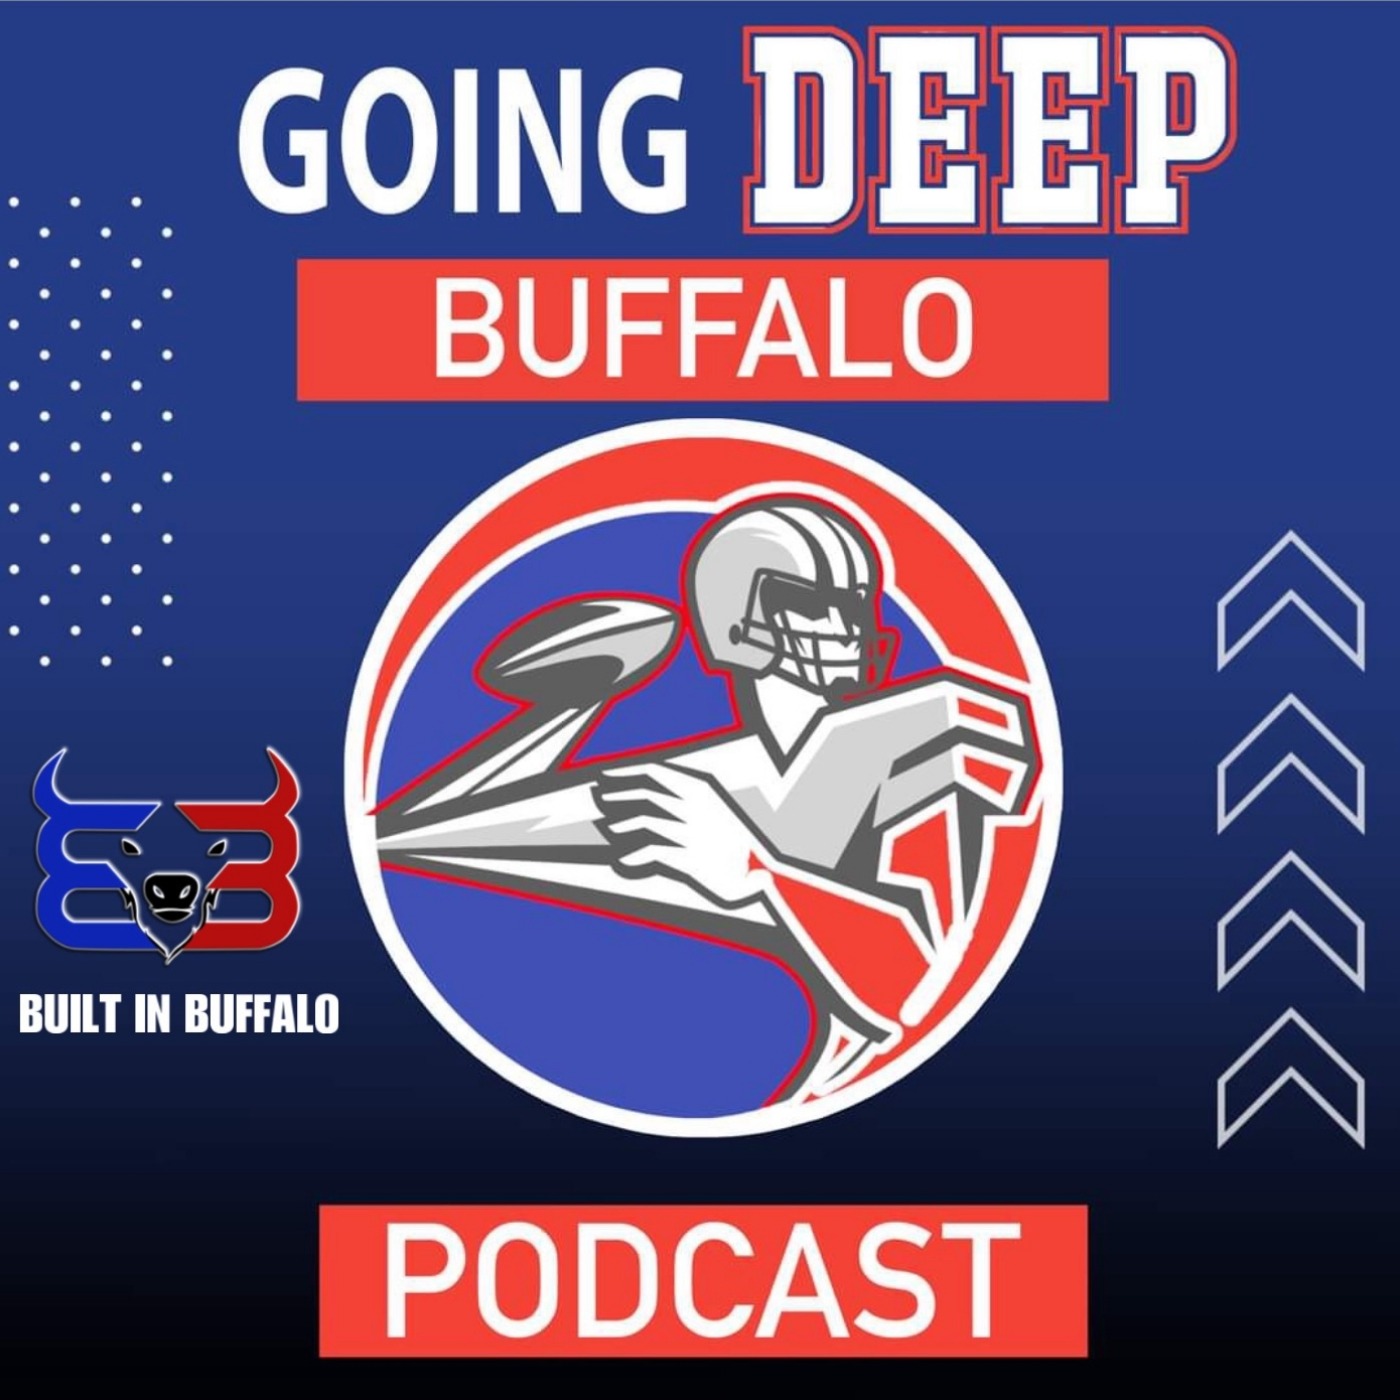 Episode 102 - Draft Season Is Open For The Bills